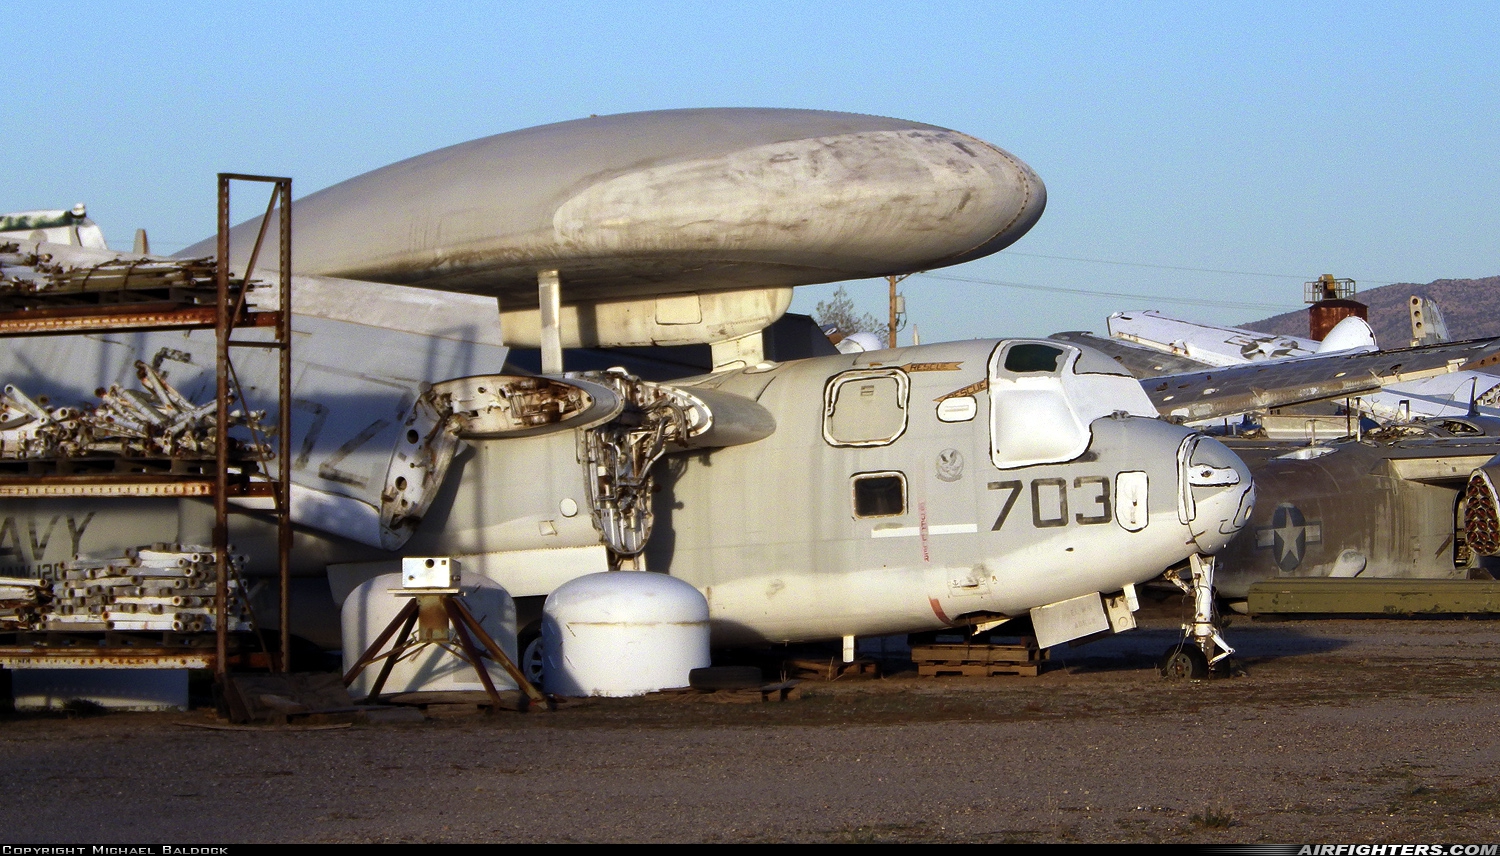 USA - Navy Grumman E-1B Tracer 148922 at Tucson - Davis-Monthan AFB (DMA / KDMA), USA